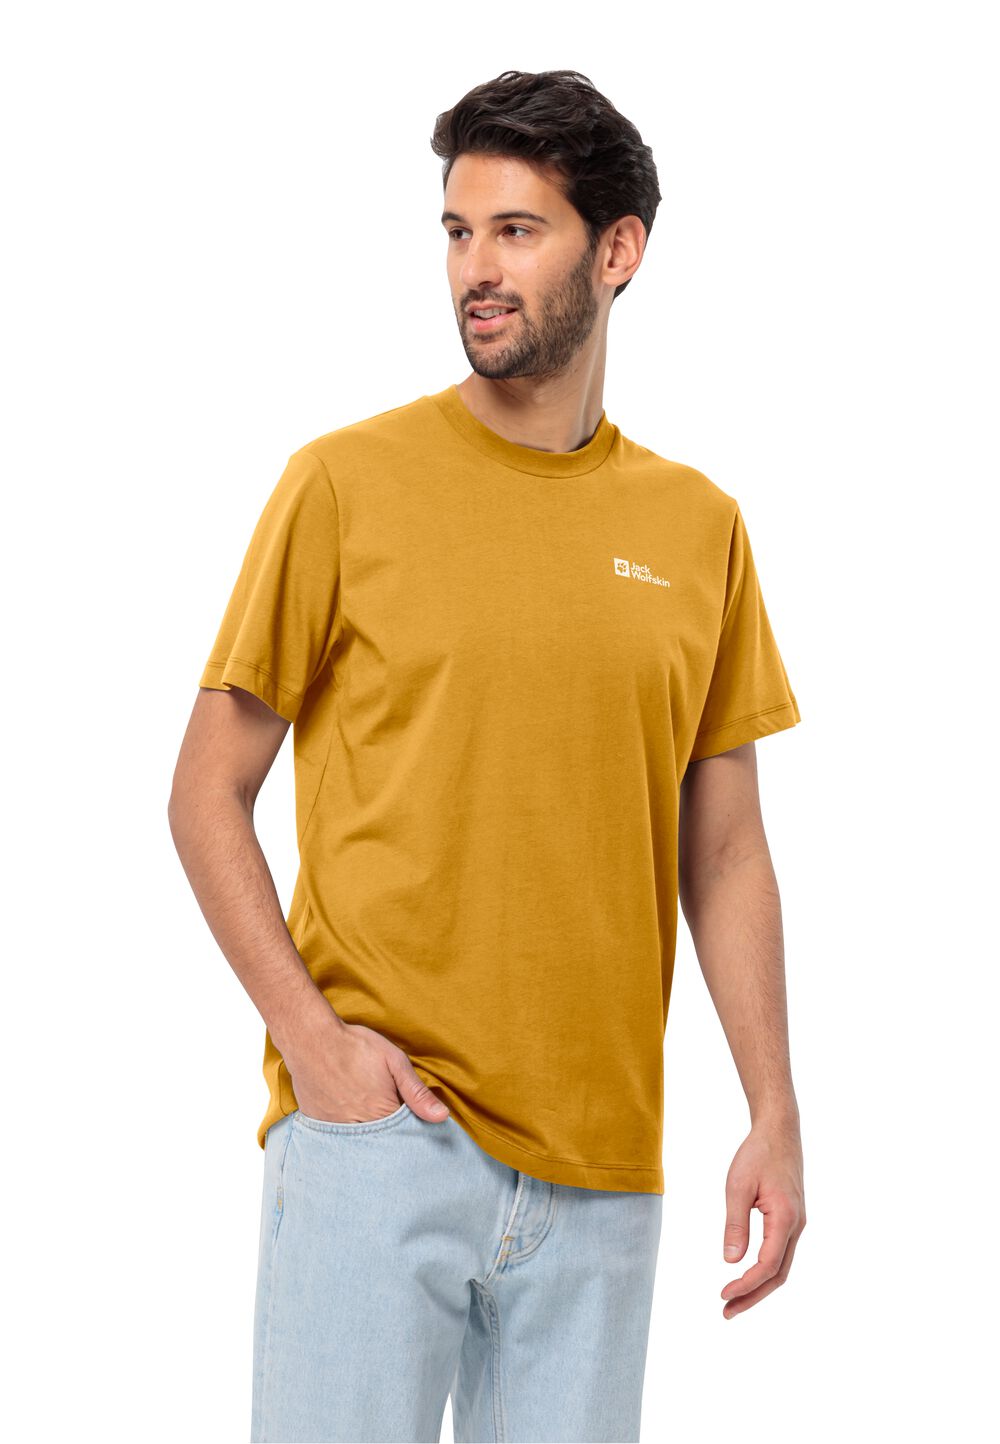 Jack Wolfskin Essential T-Shirt Men Heren T-shirt van biologisch katoen S bruin curry